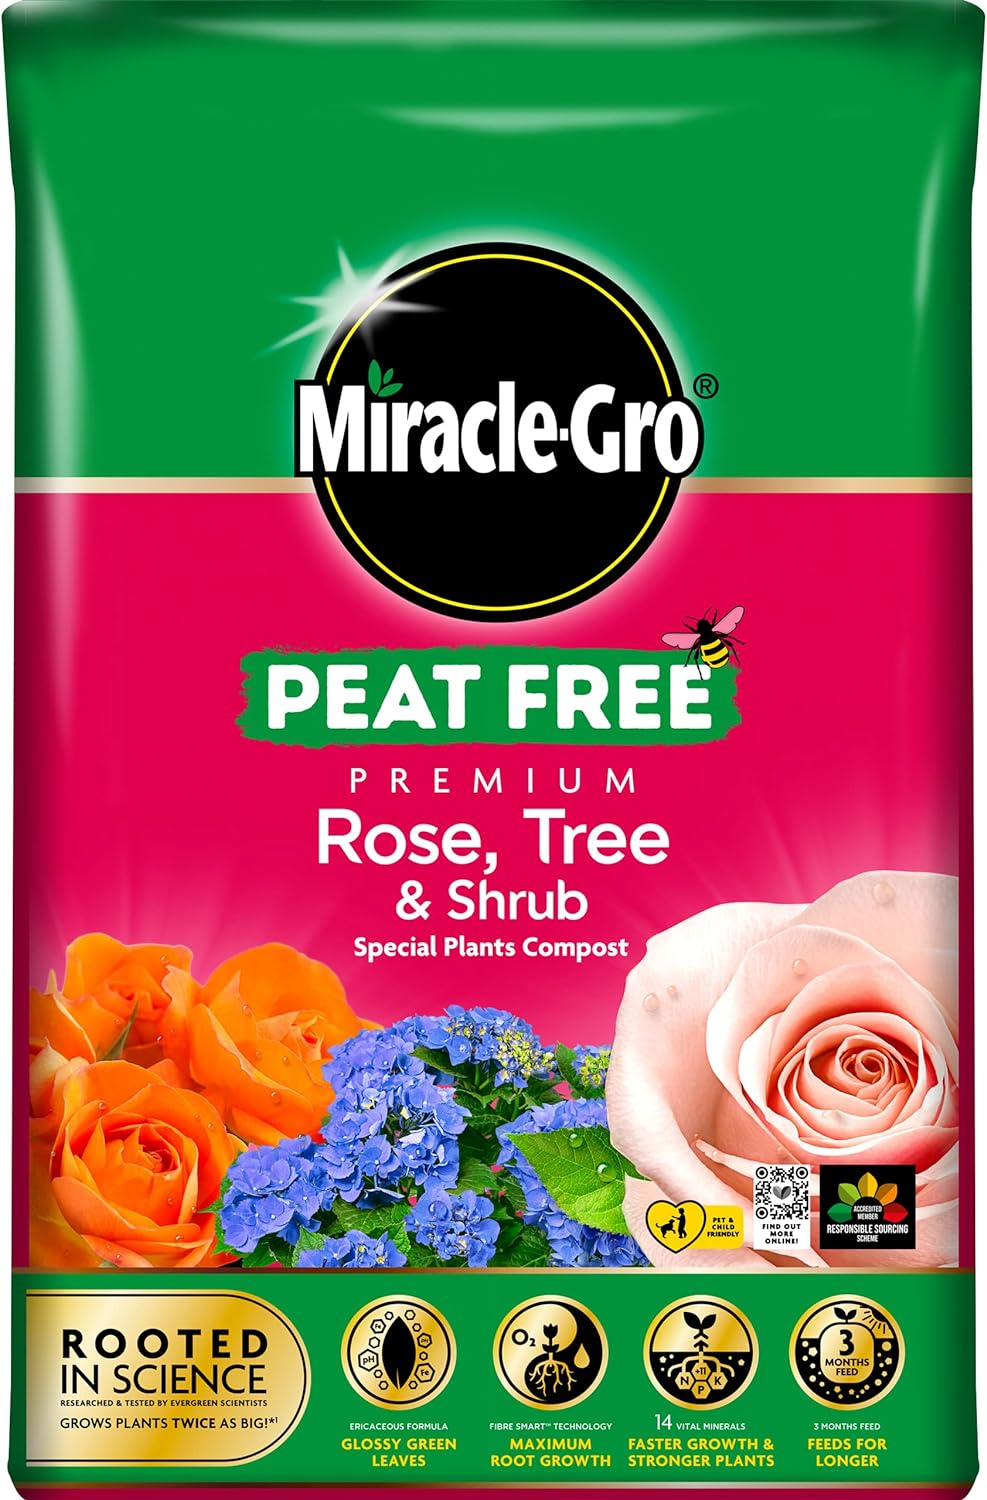 Miracle-Gro Peat Free Rose, Tree & Shrub Compost